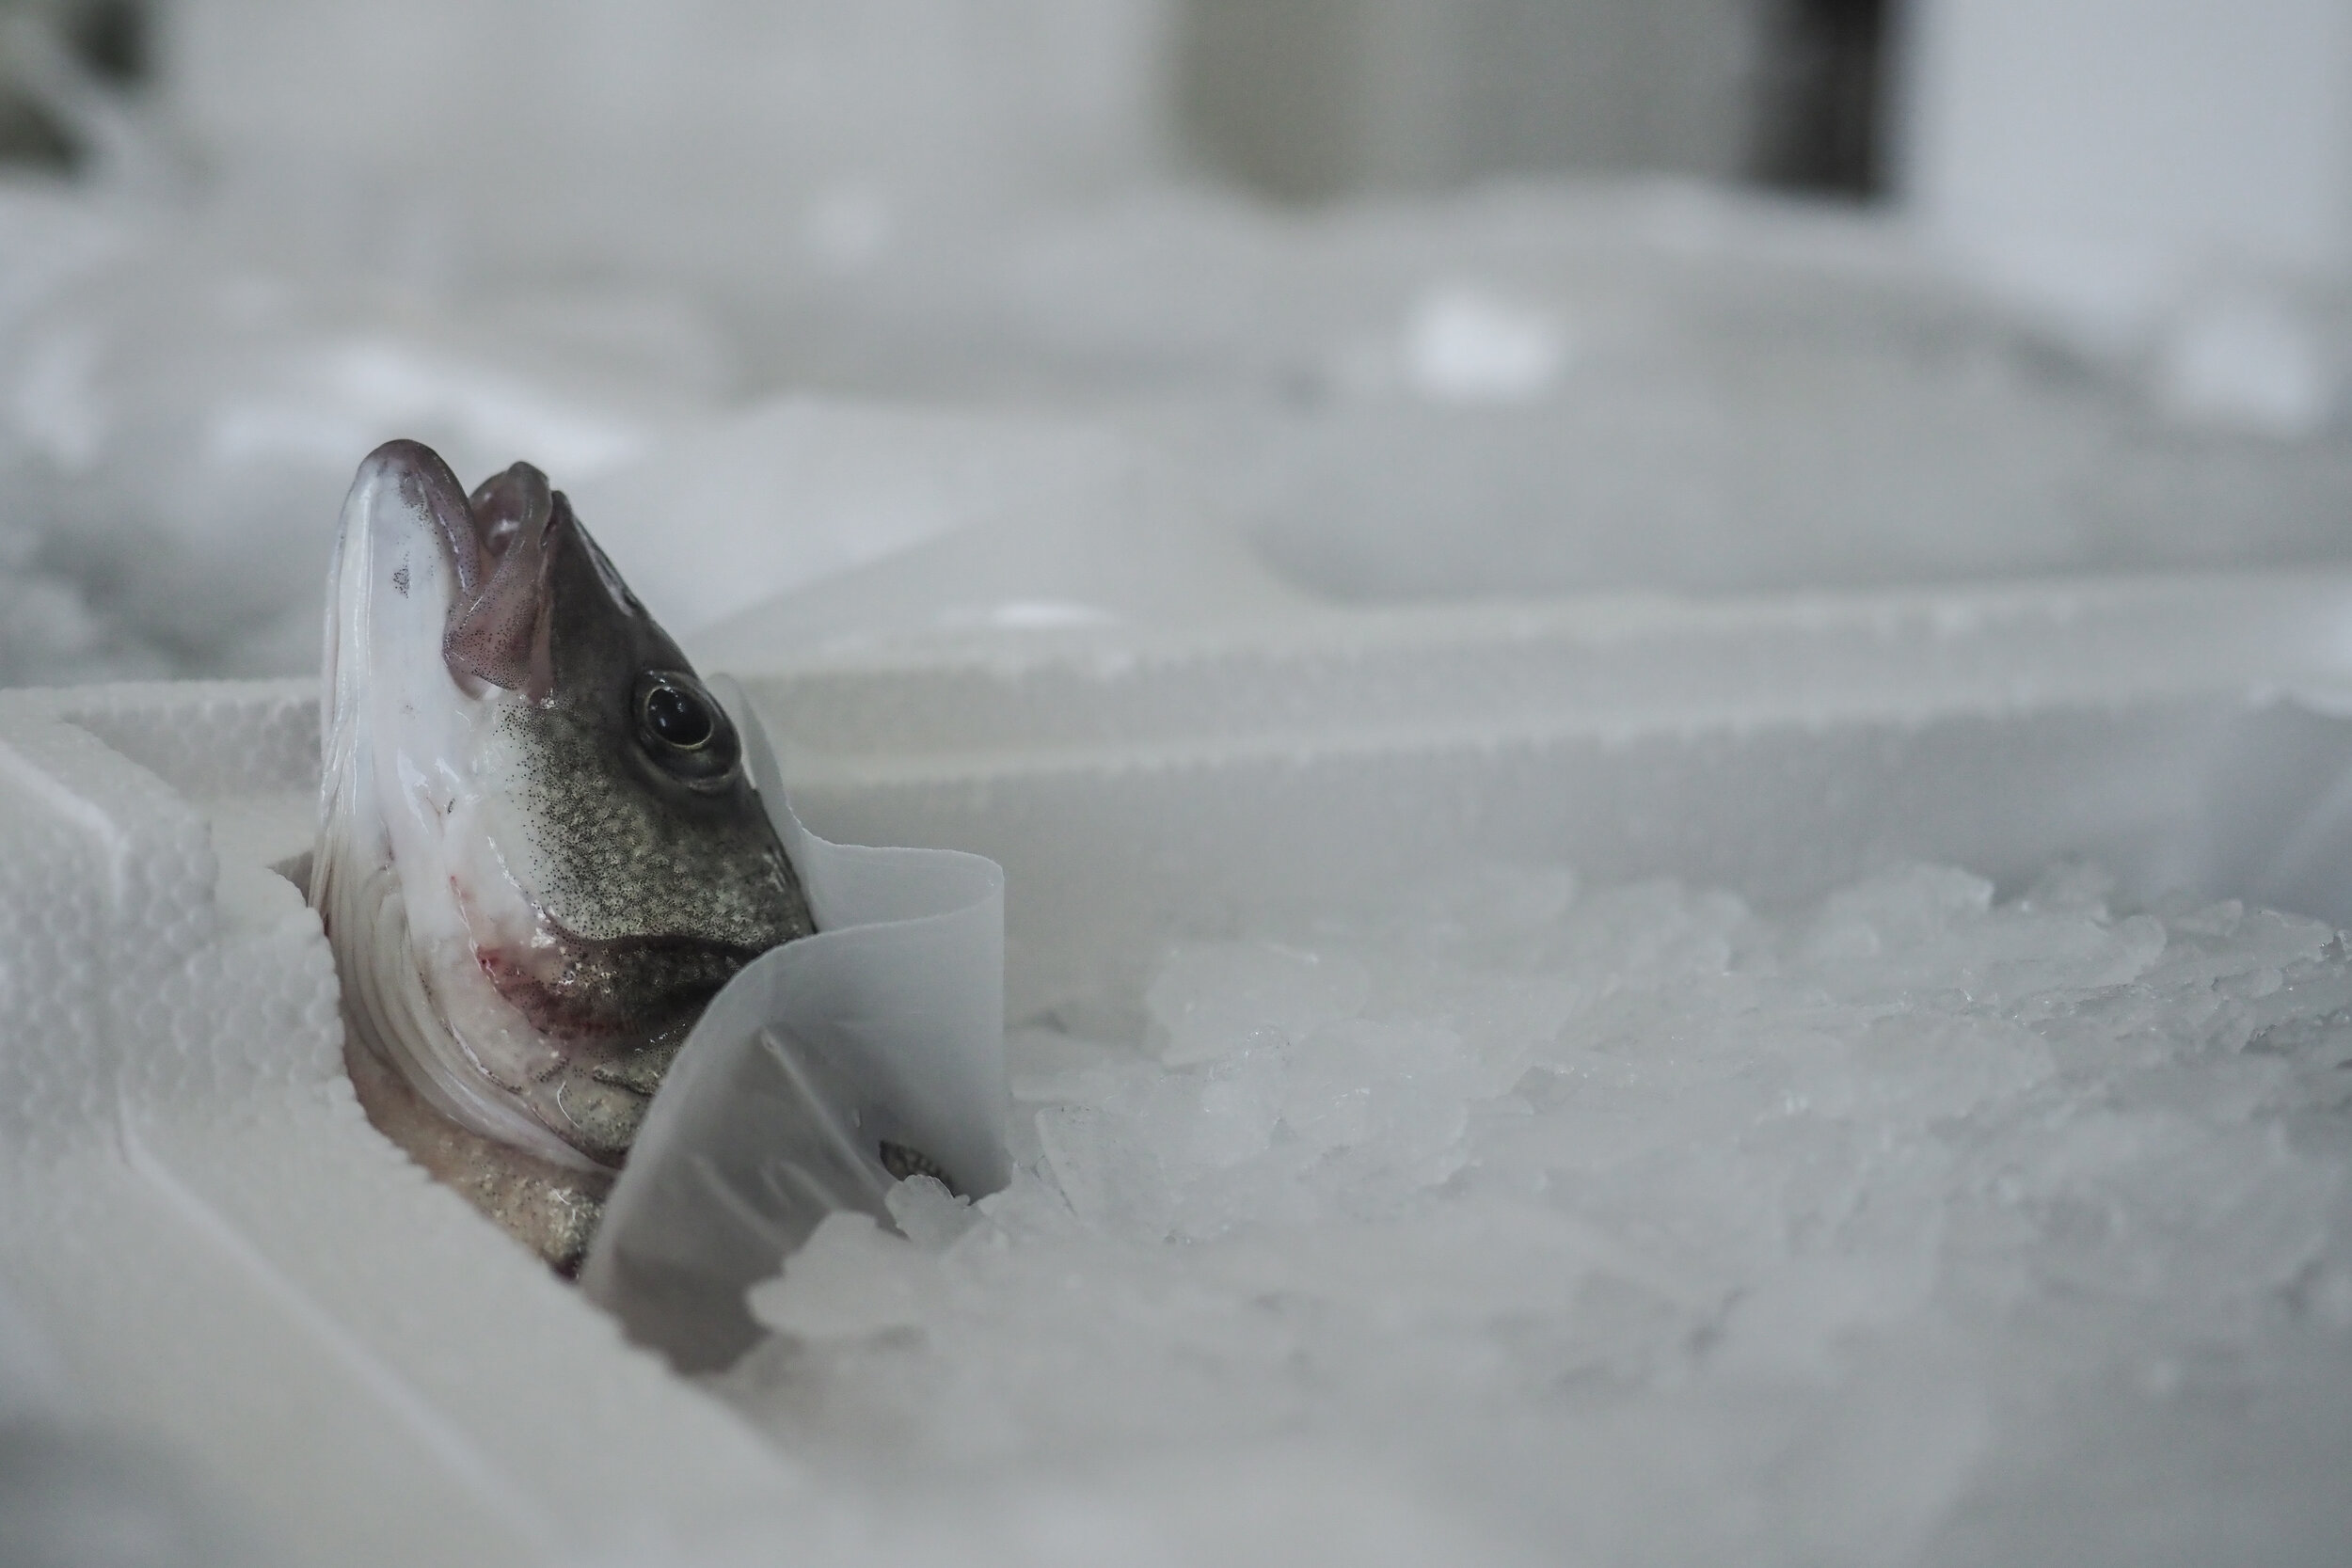 Sea bass still alive packed in styrofoam box